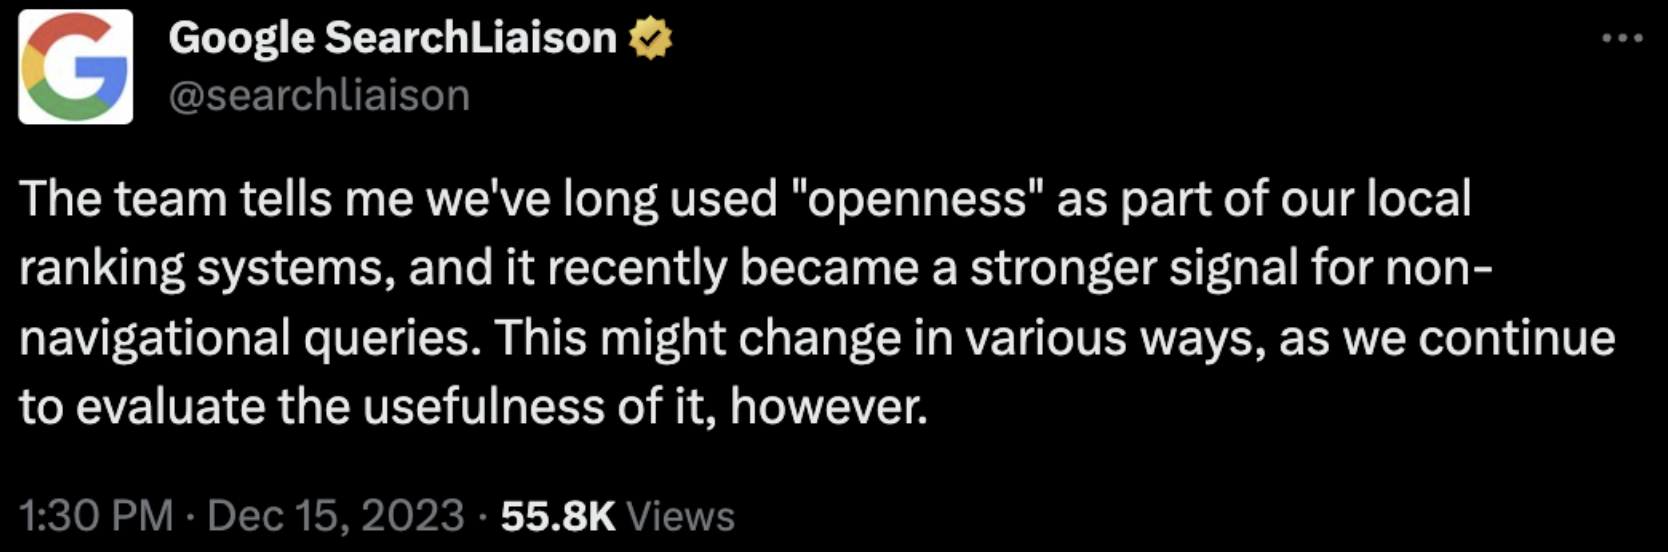 google searchliaison tweet on openness